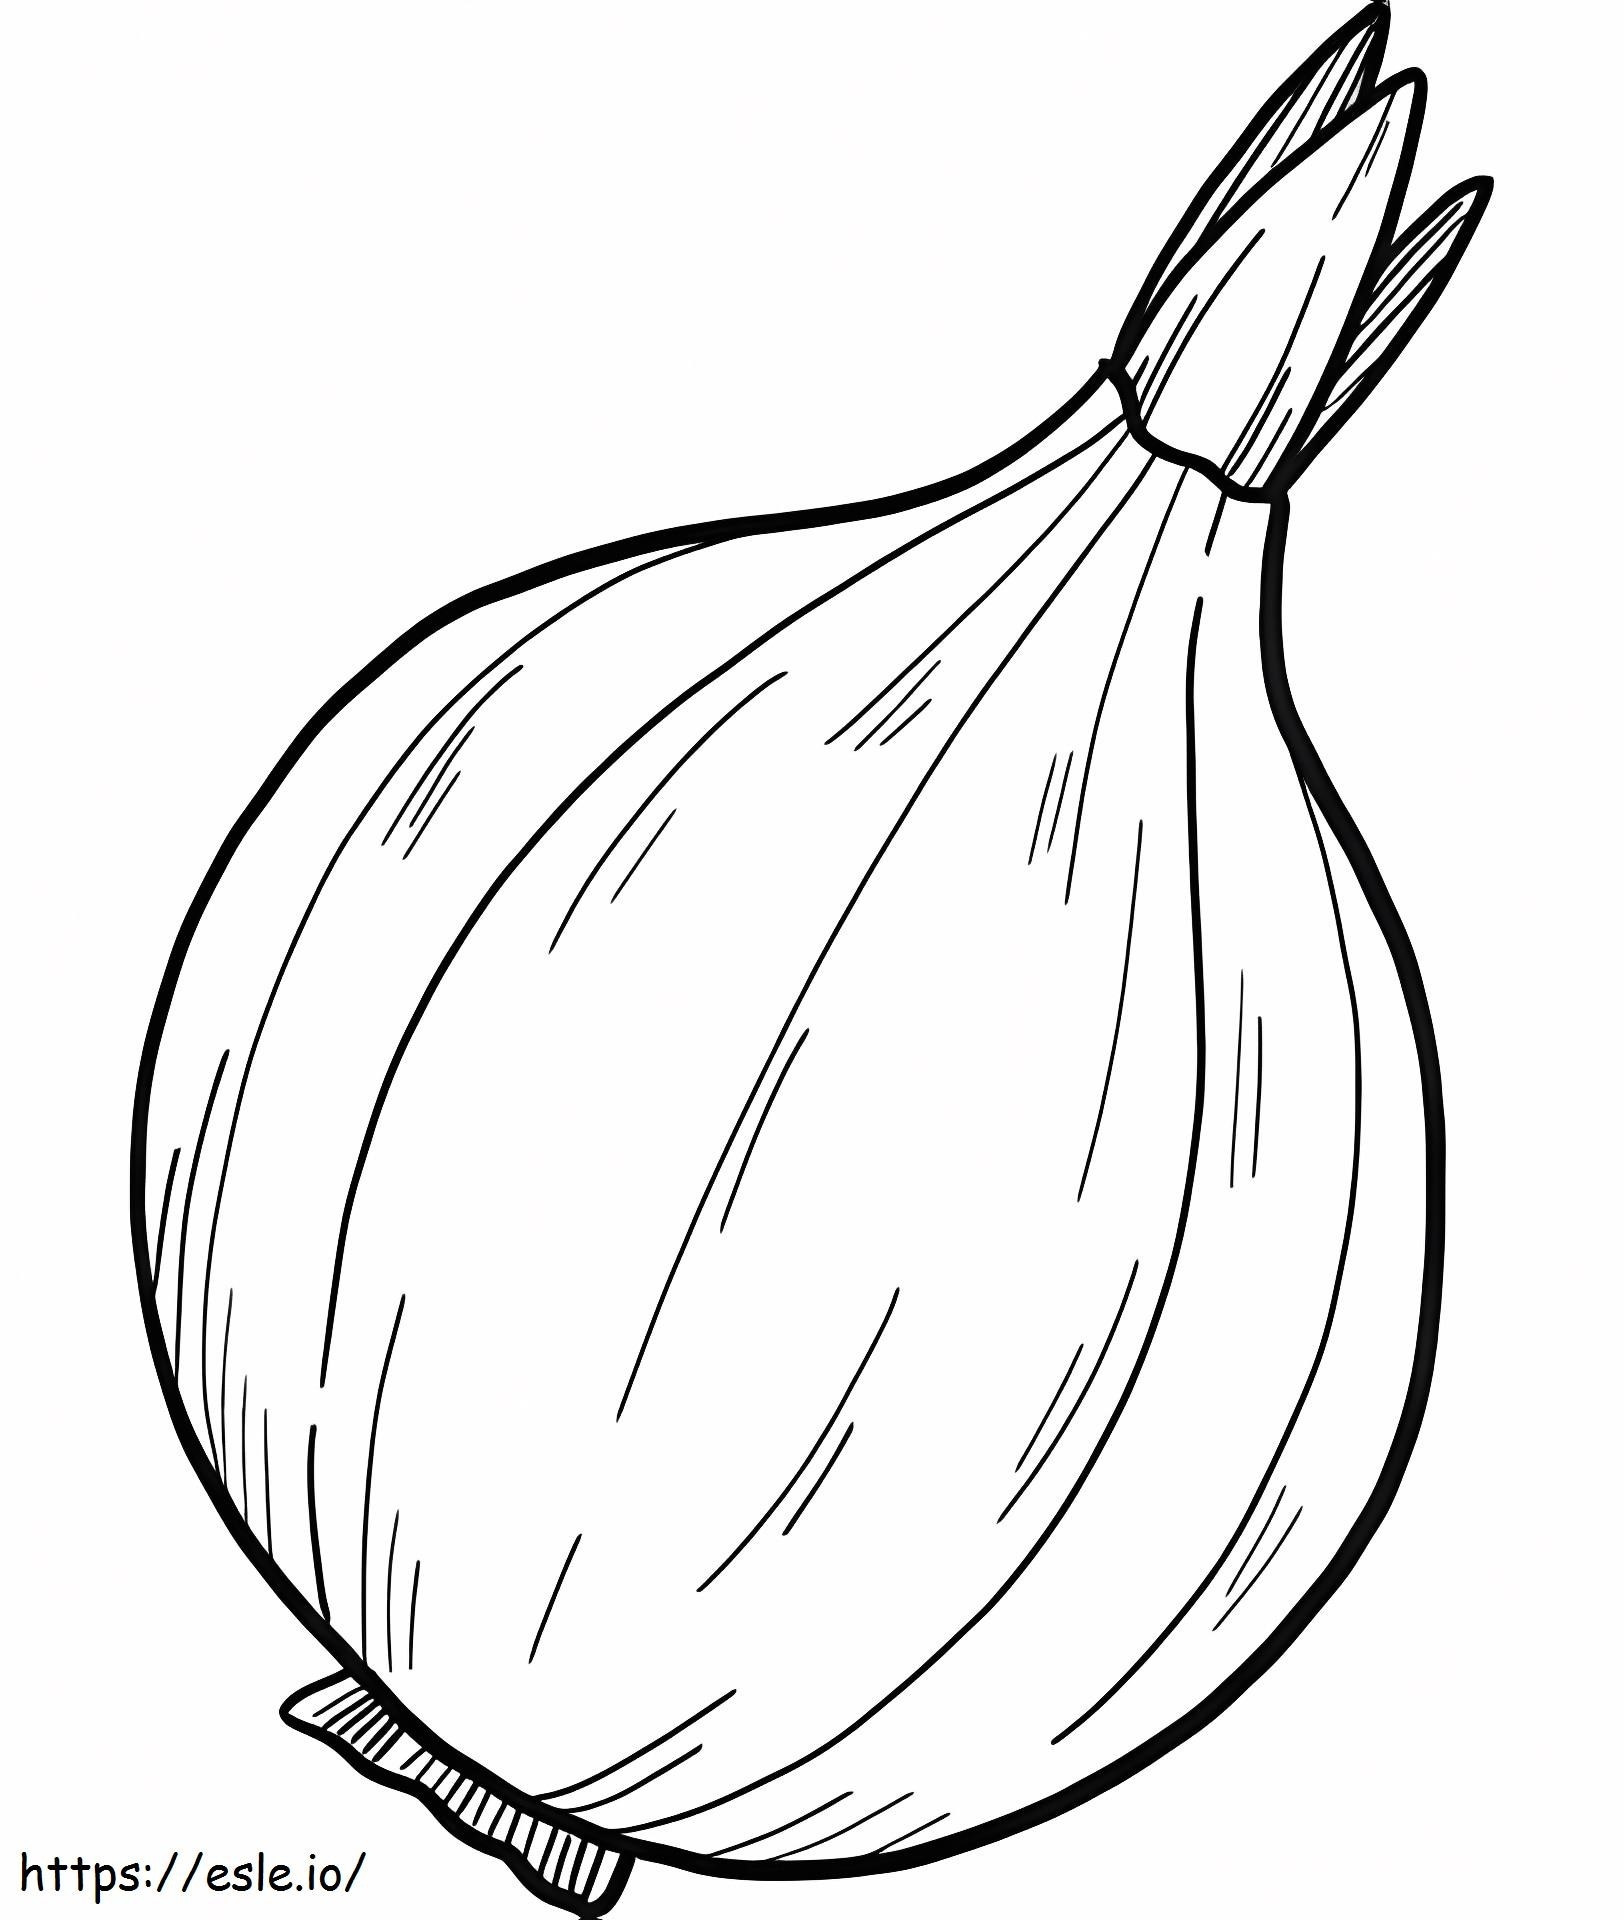 Plain Onion coloring page